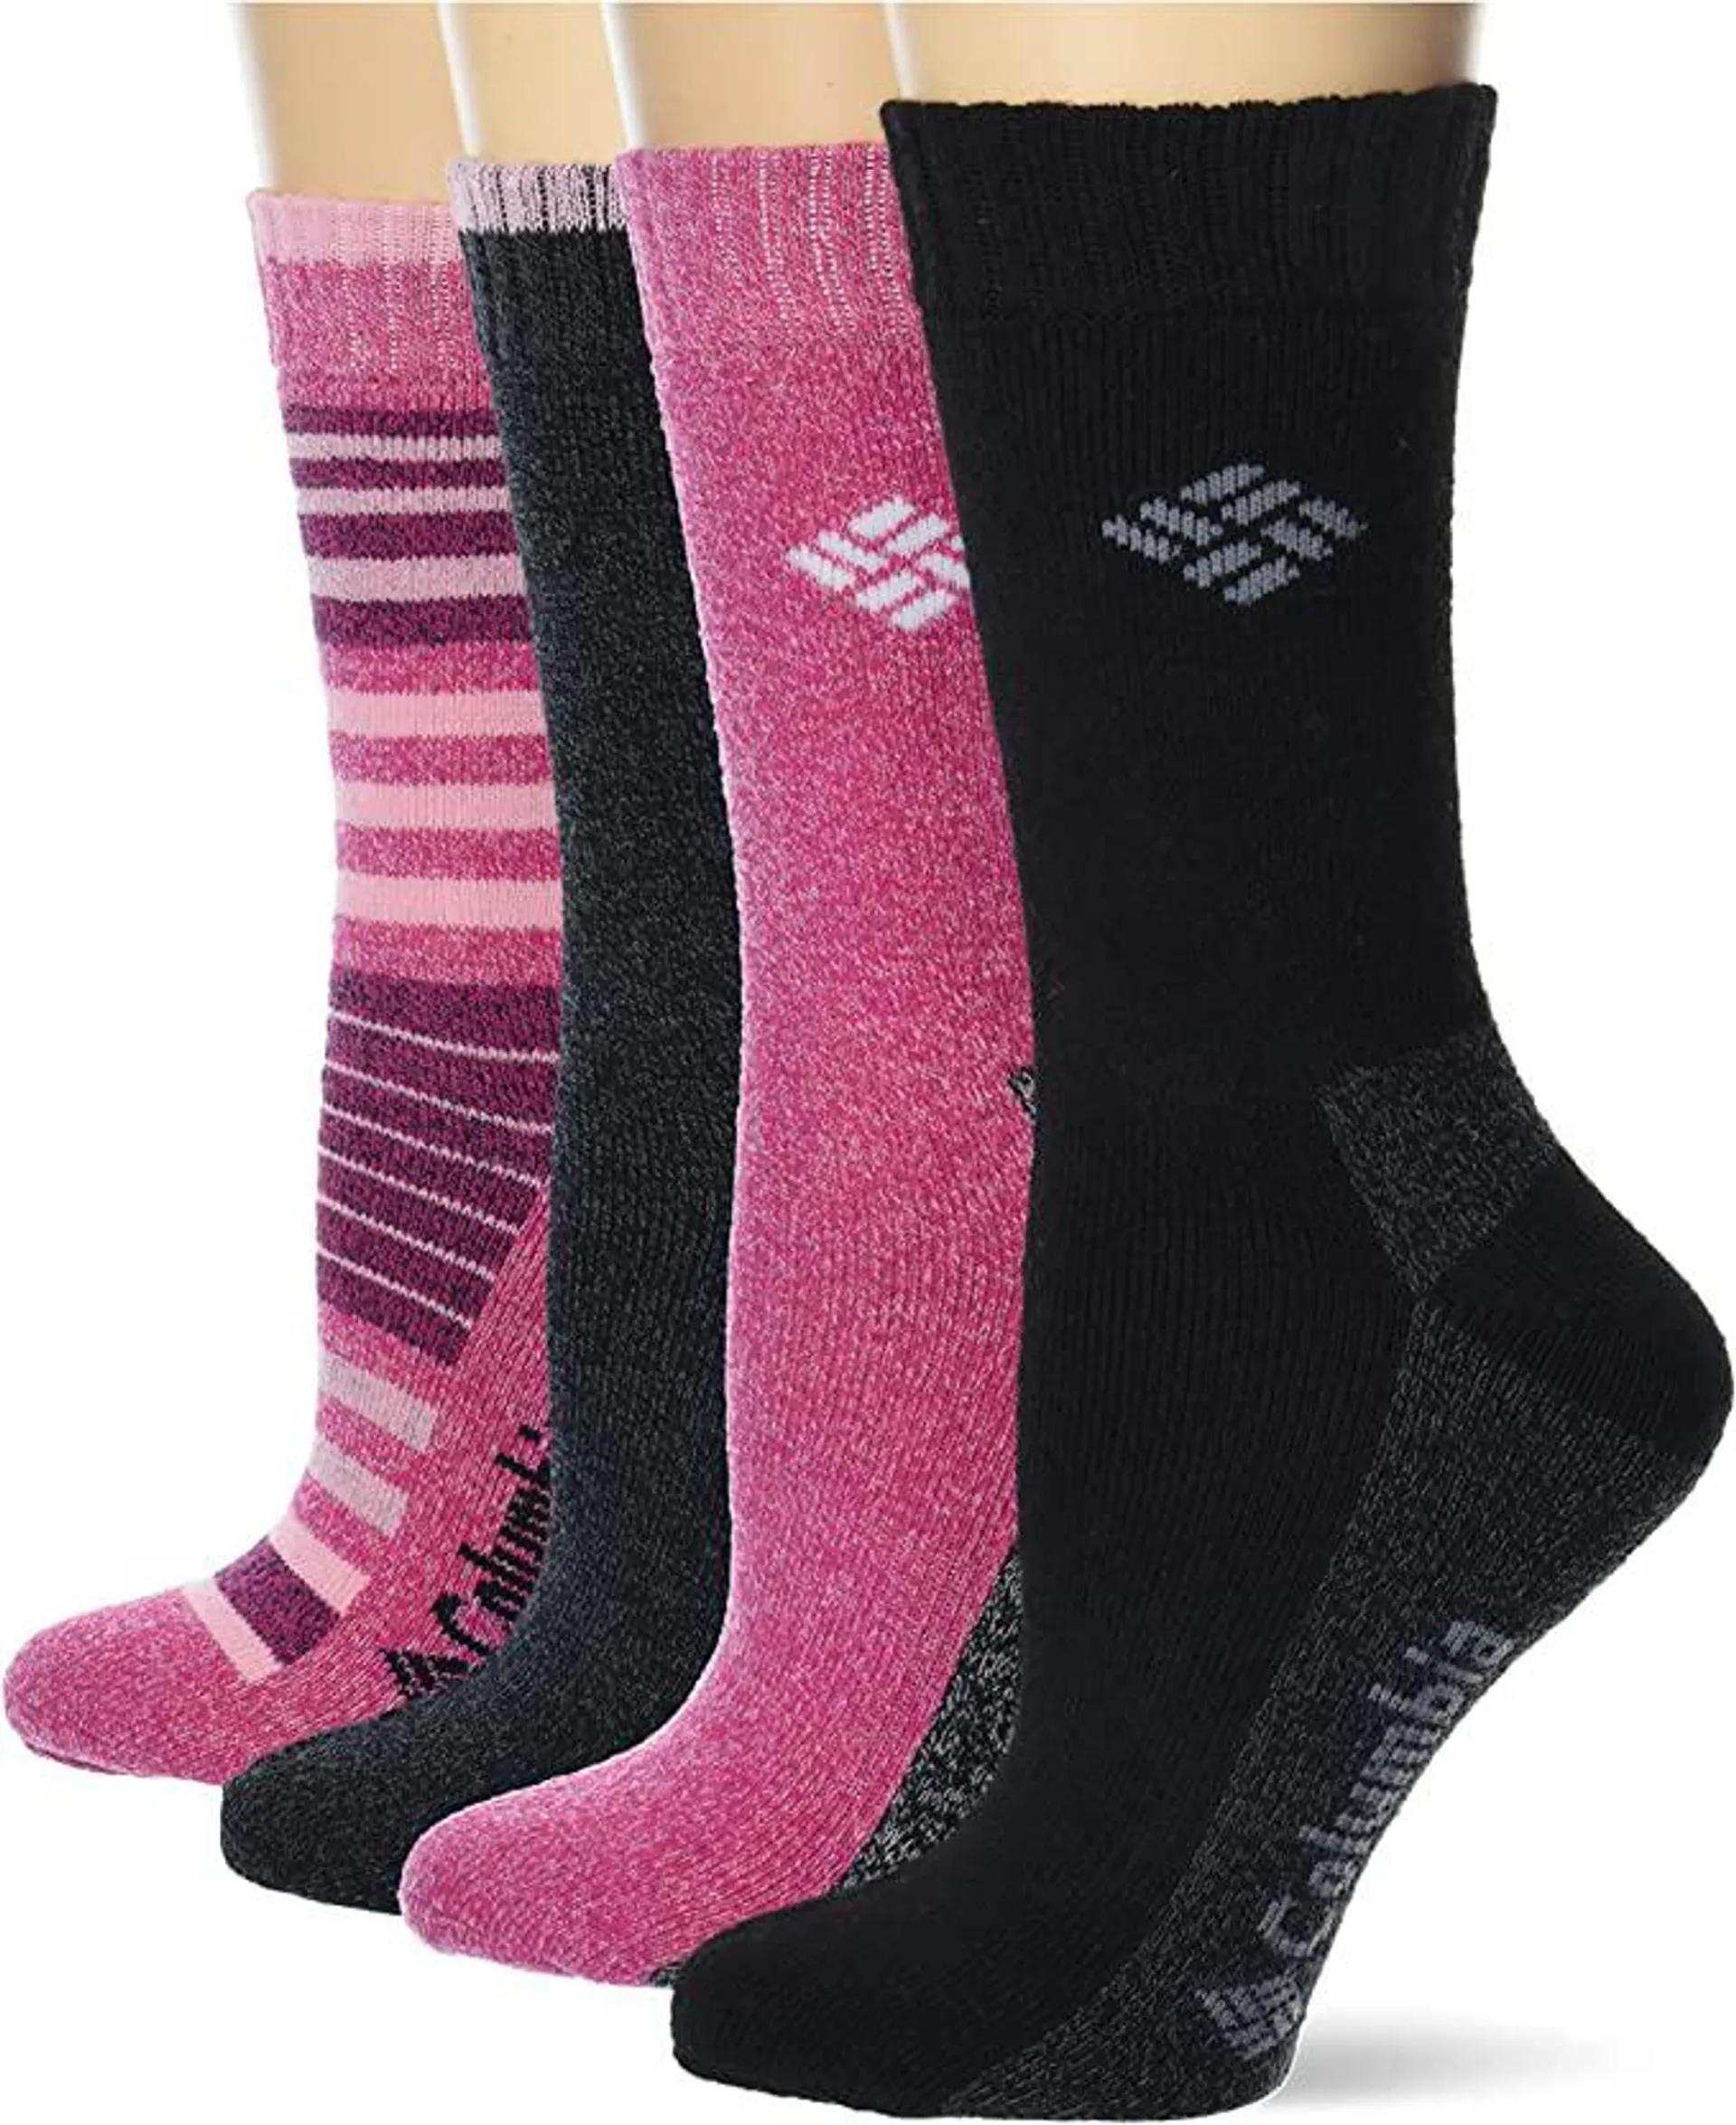 Columbia Womens Moisture Control Crew Socks, 4-pair